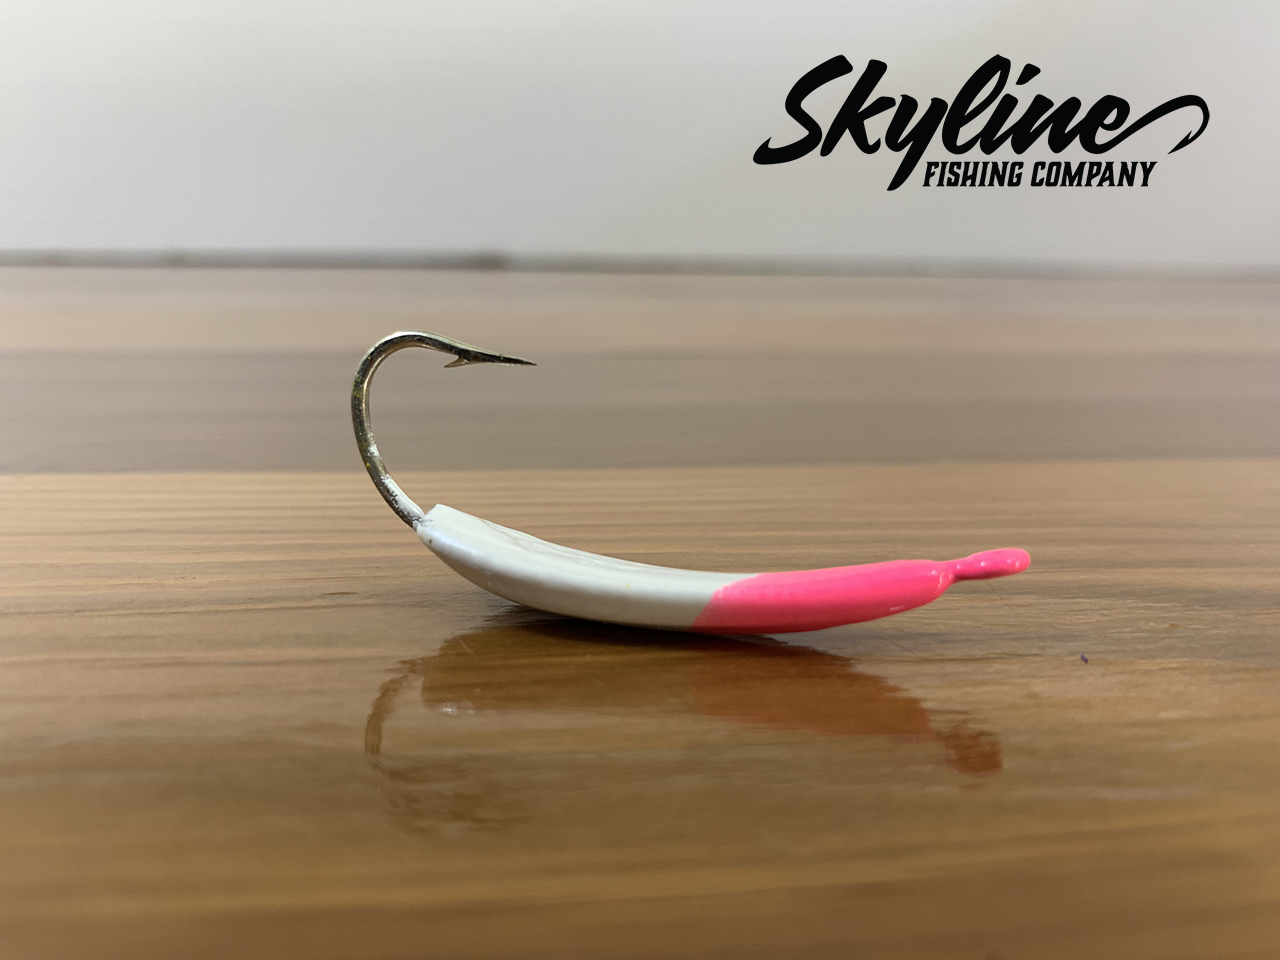 Skyline Wacky Jumper Pompano Jigs - Skyline Fishing Company Skyline Jigs